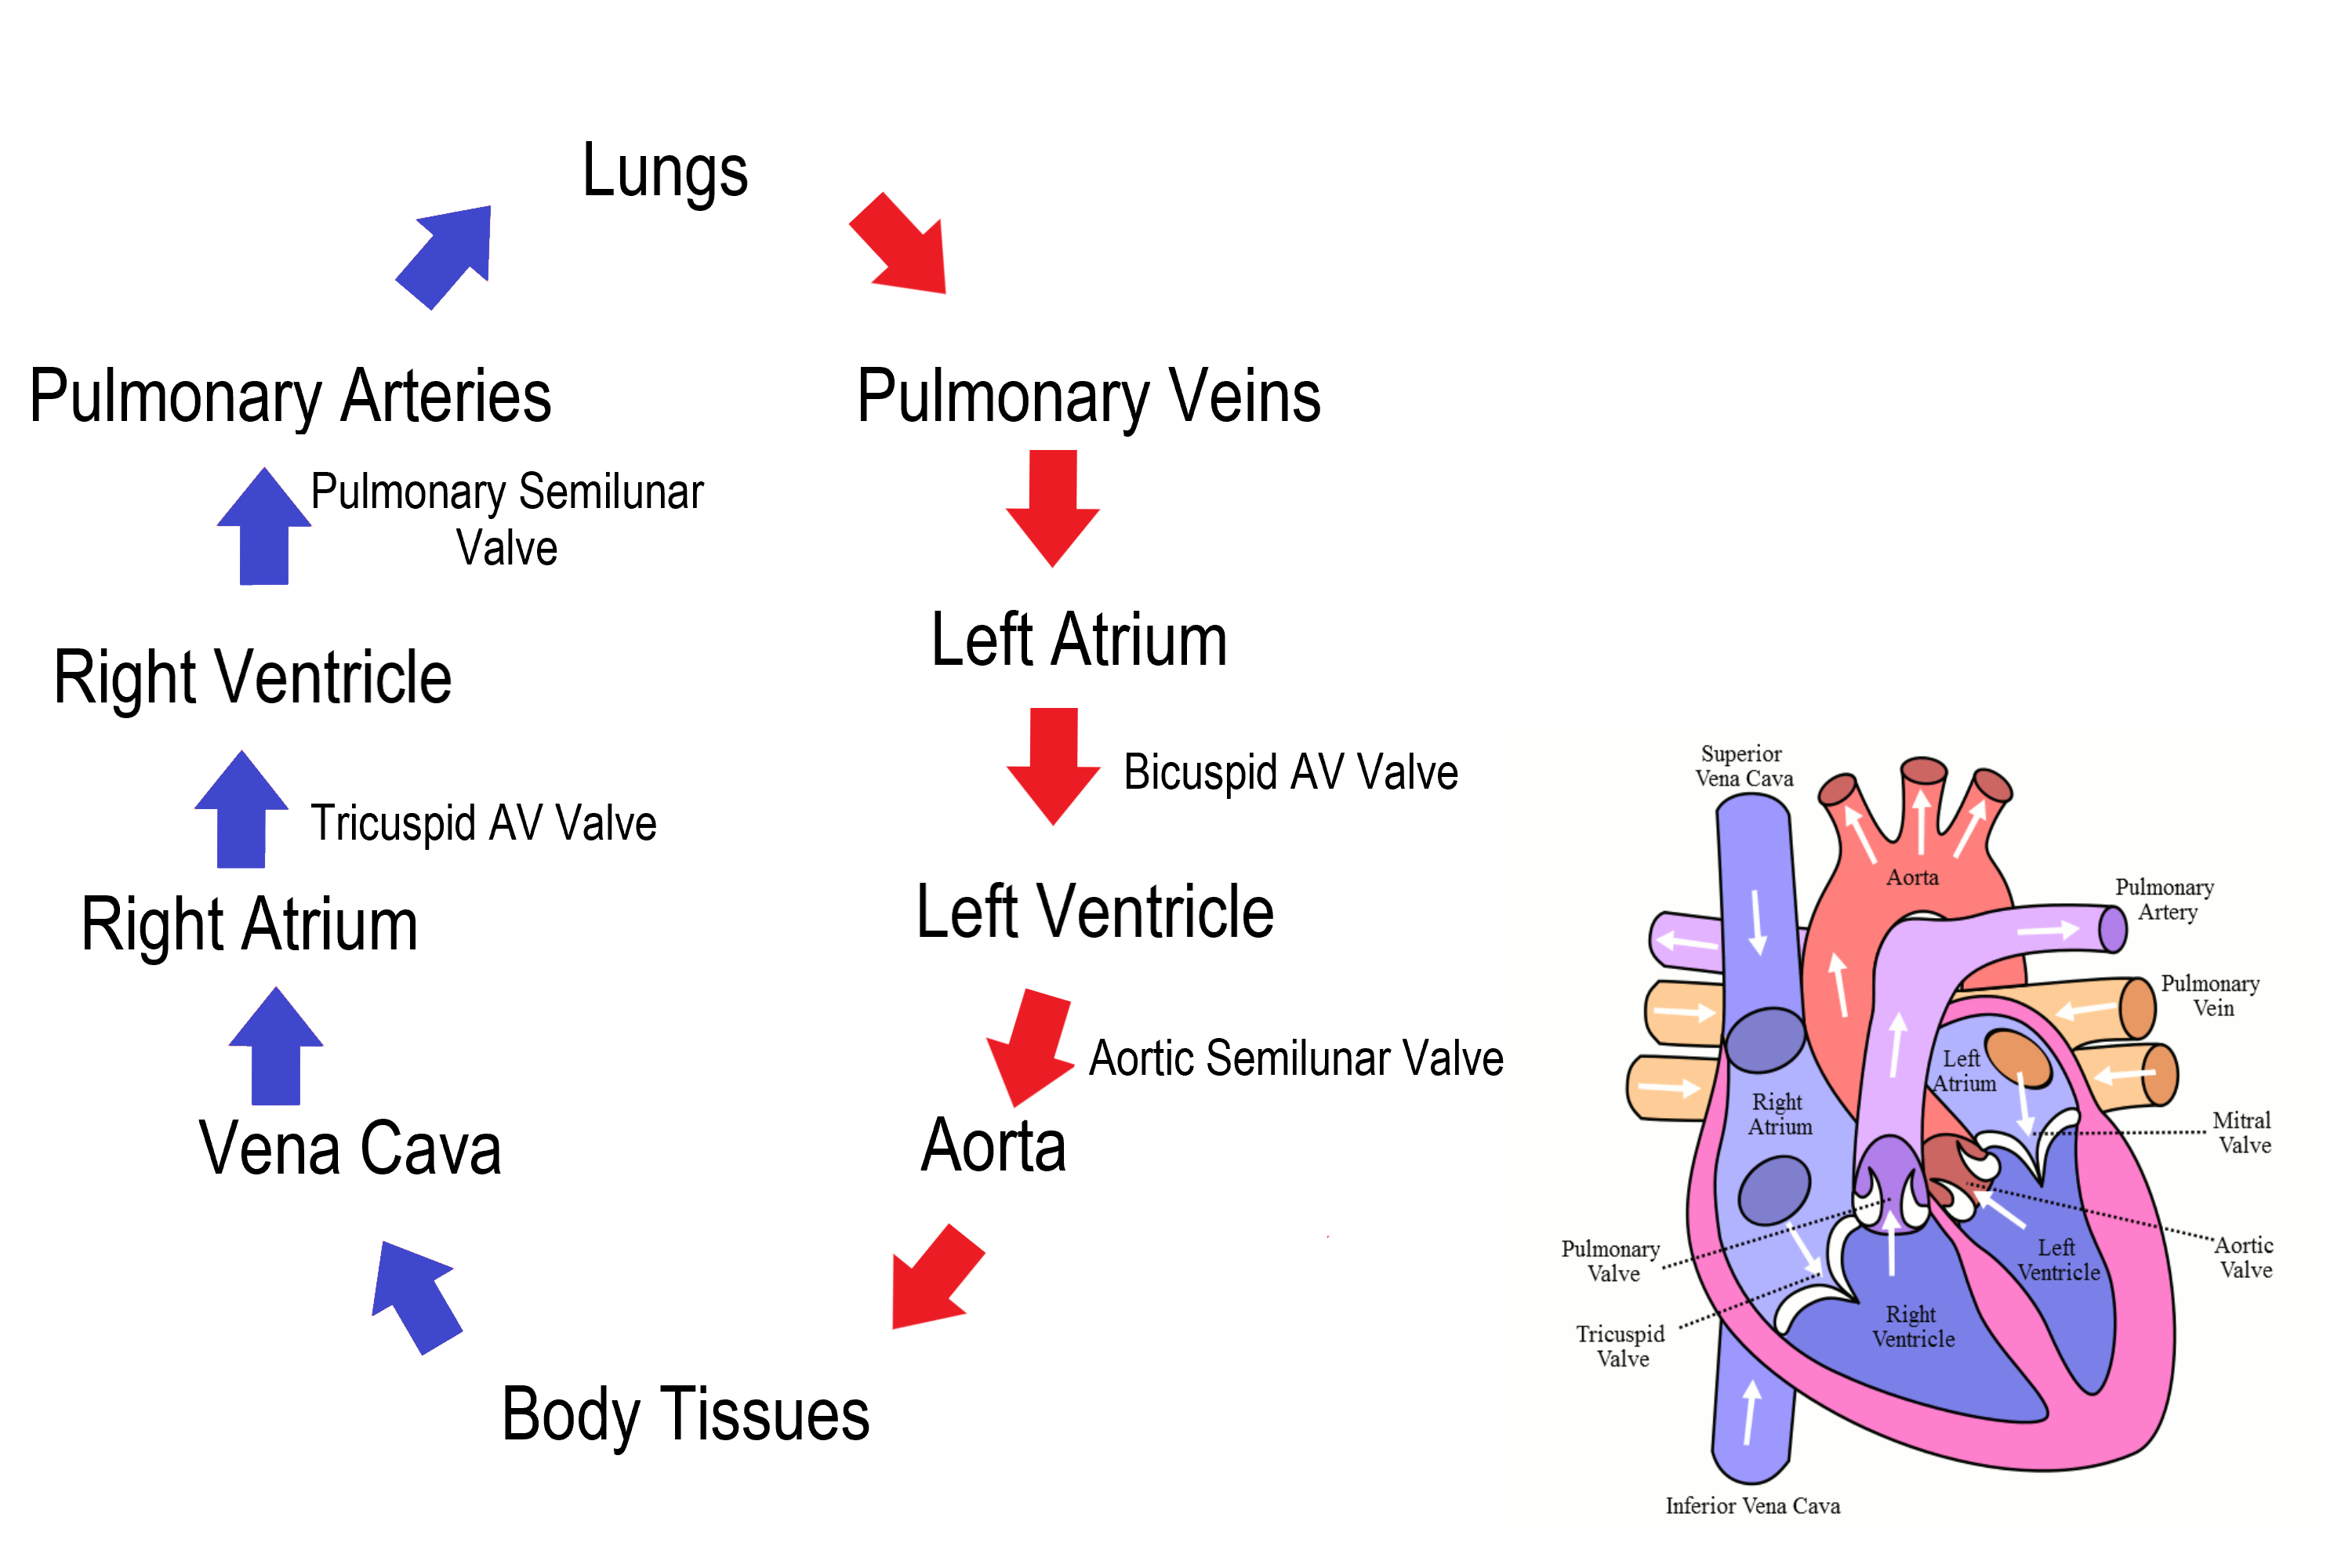 <ul><li><p>Lungs pick up oxygen</p></li><li><p>Pulmonary Vein into the heart</p></li><li><p>Through the Left Atrium and Ventricle pumped to the body</p></li><li><p>Aorta-major artery out of heart</p></li><li><p>Arteries path through the body</p></li><li><p>Capillaries destination of oxygen, and carbon dioxide is picked up</p></li><li><p>Veins take deoxygenated blood back to the heart</p></li><li><p>Vena Cava's "blue" blood enters the heart</p></li><li><p>Through the Right Atrium and Ventricle pumped to the lungs</p></li><li><p>Pulmonary Artery "blue" blood heads to lungs</p></li><li><p>Lungs-Drops off carbon dioxide</p></li></ul>